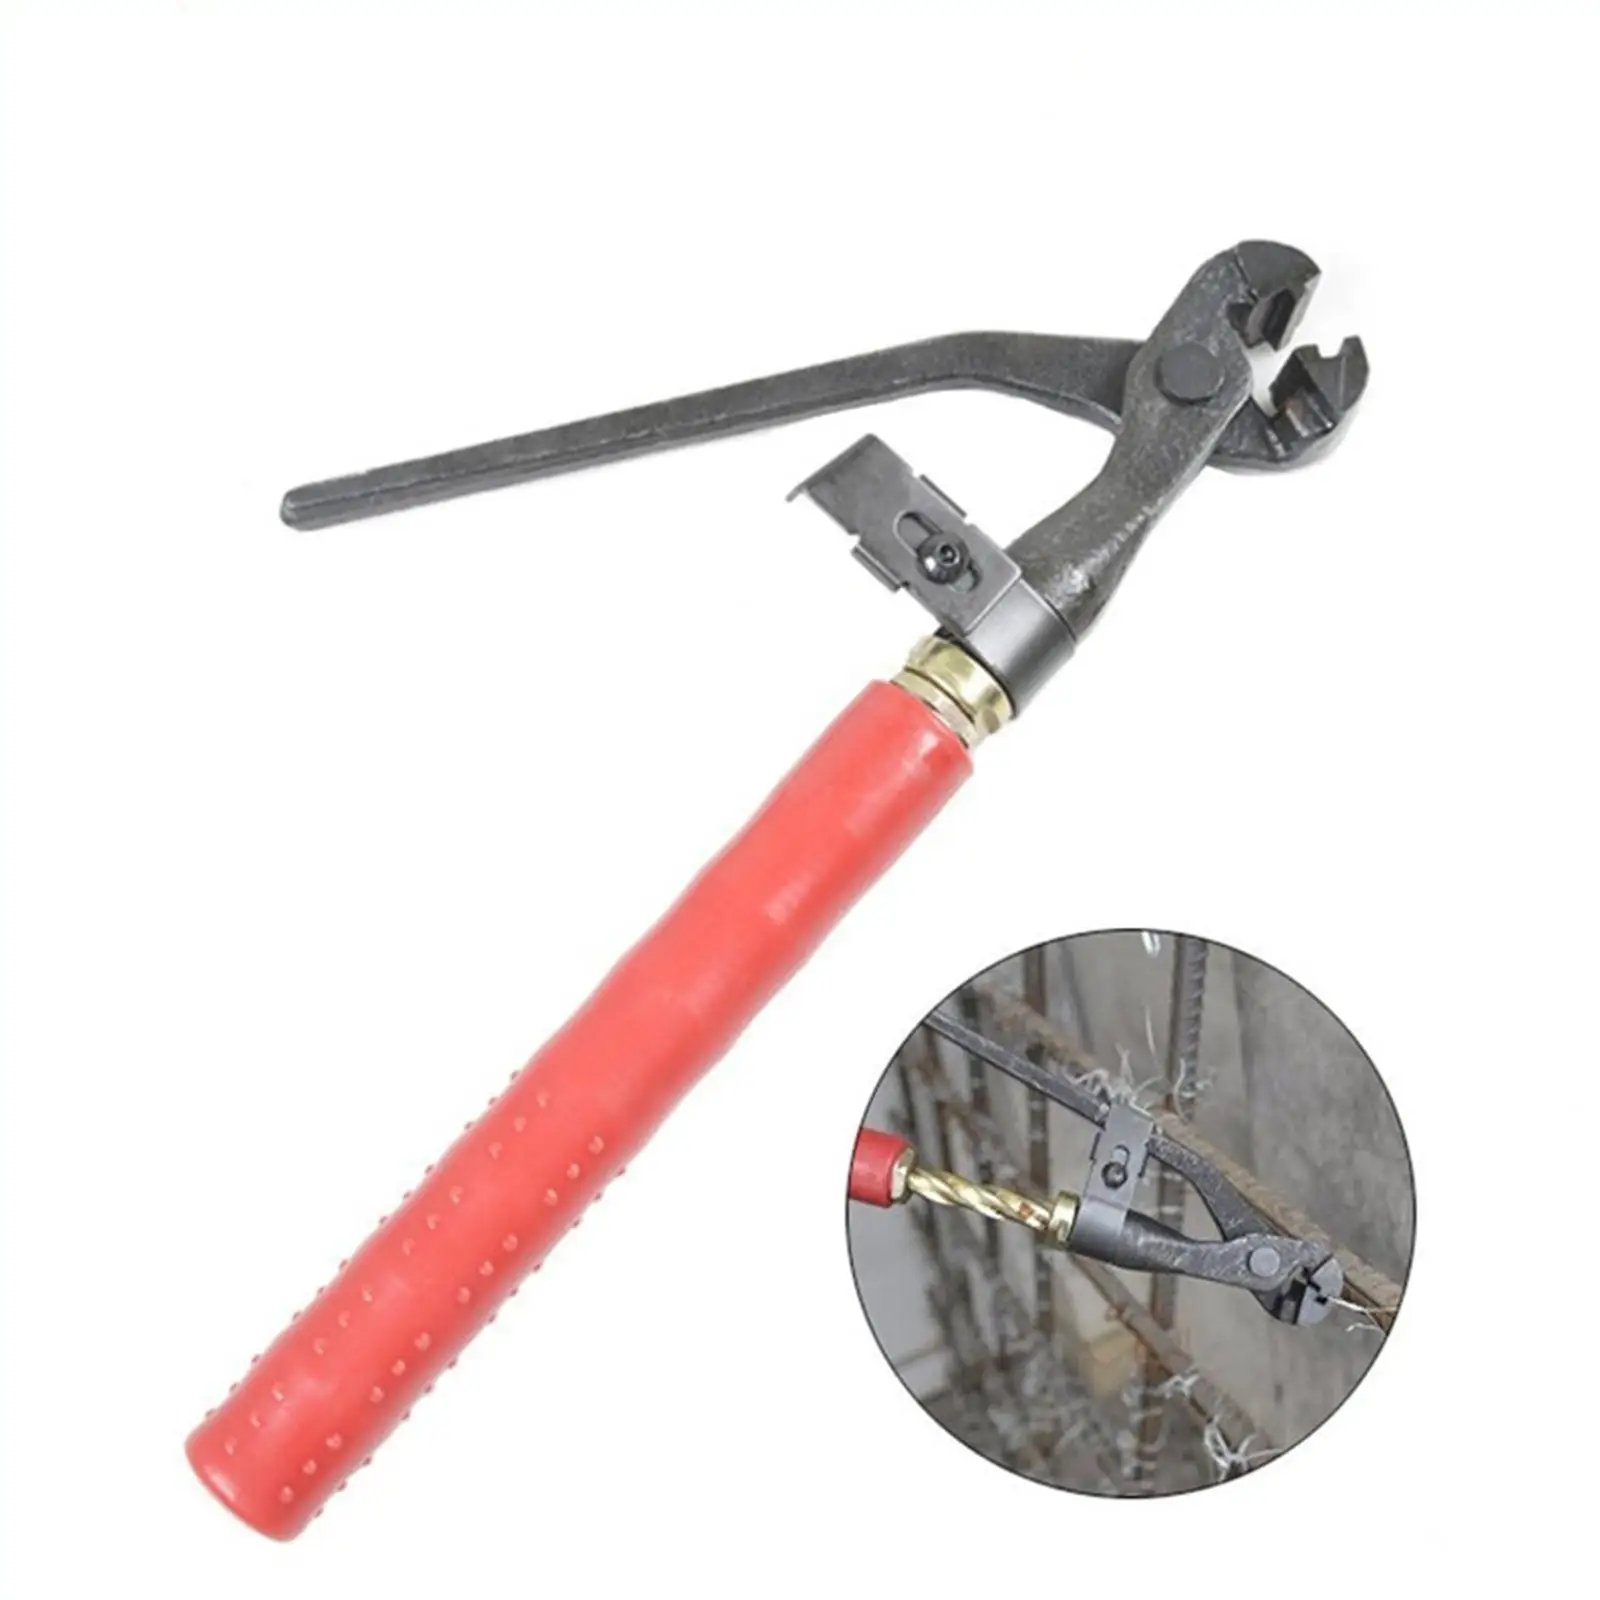 Rebar Pliers Manual Reinforcing Pliers Cut Reinforcement Tool Hightech Water Pump Pliers